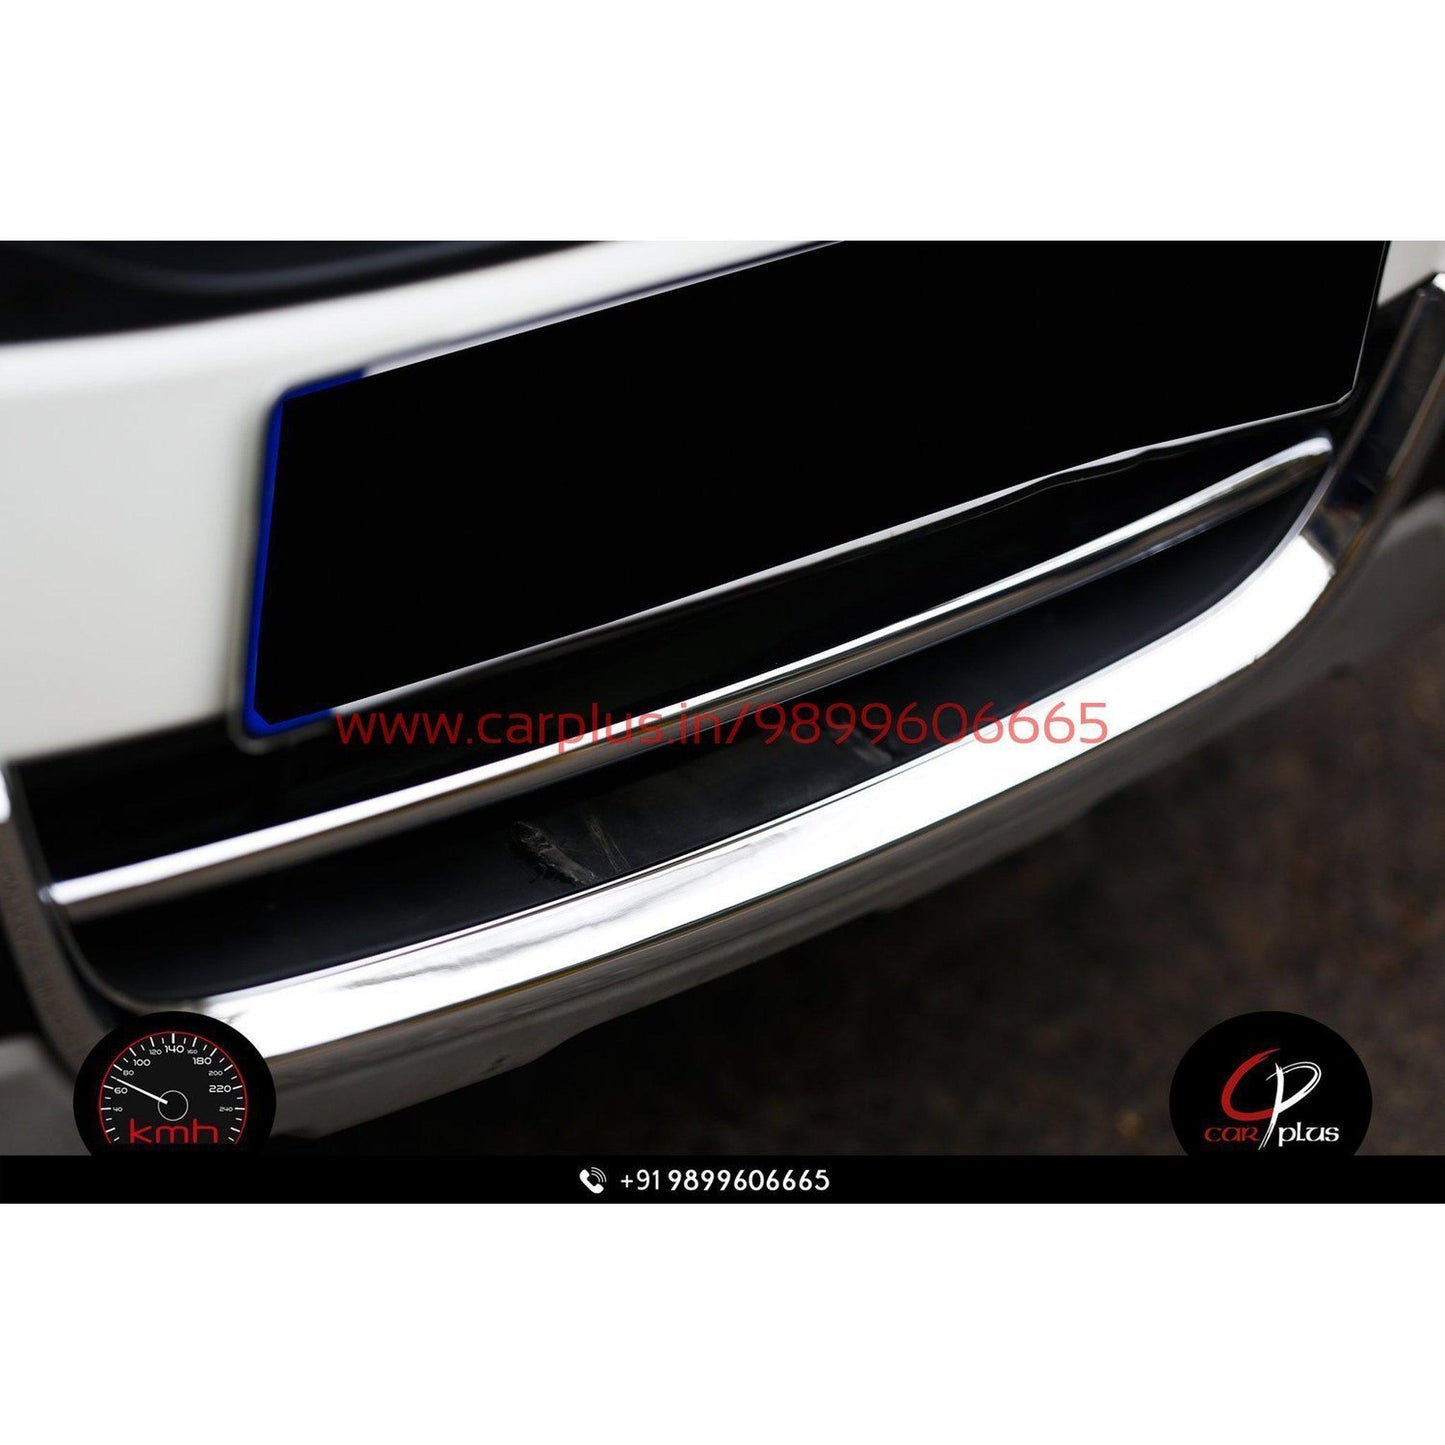 KMH Front Bumper Grill Trim Chrome For Maruti Suzuki SCross (1st